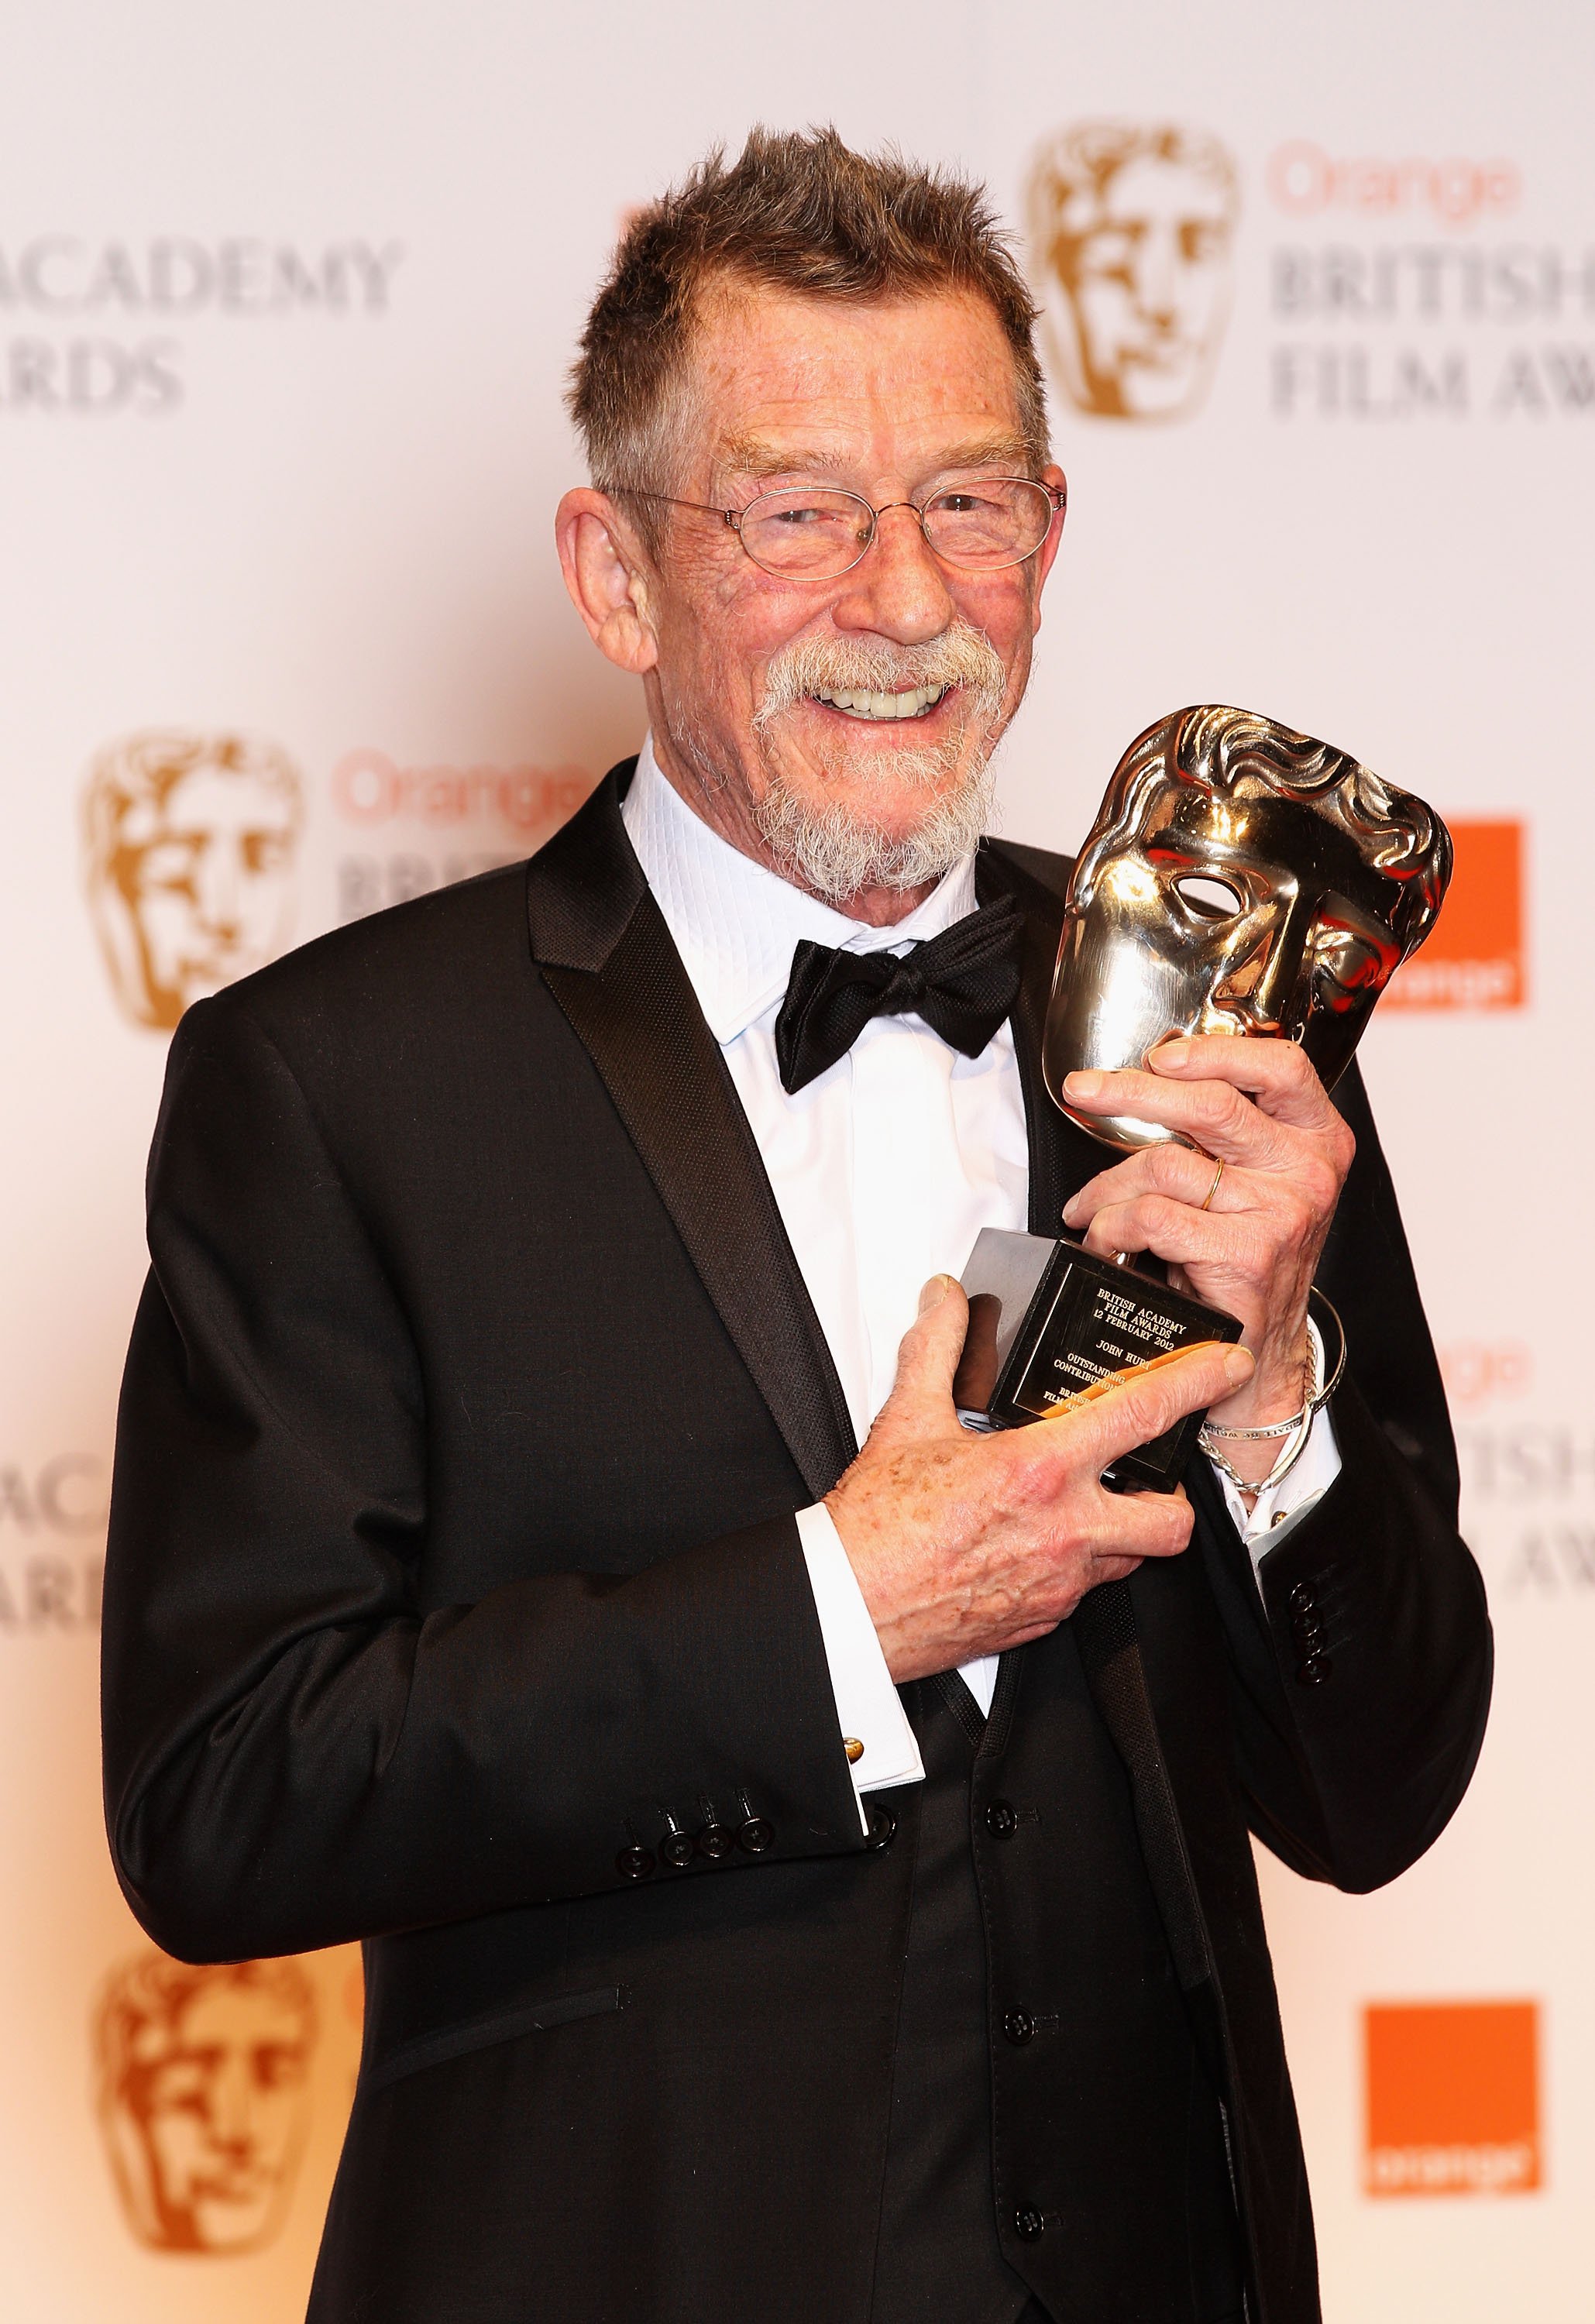 John Hurt at the British Academy Film Awards 2012